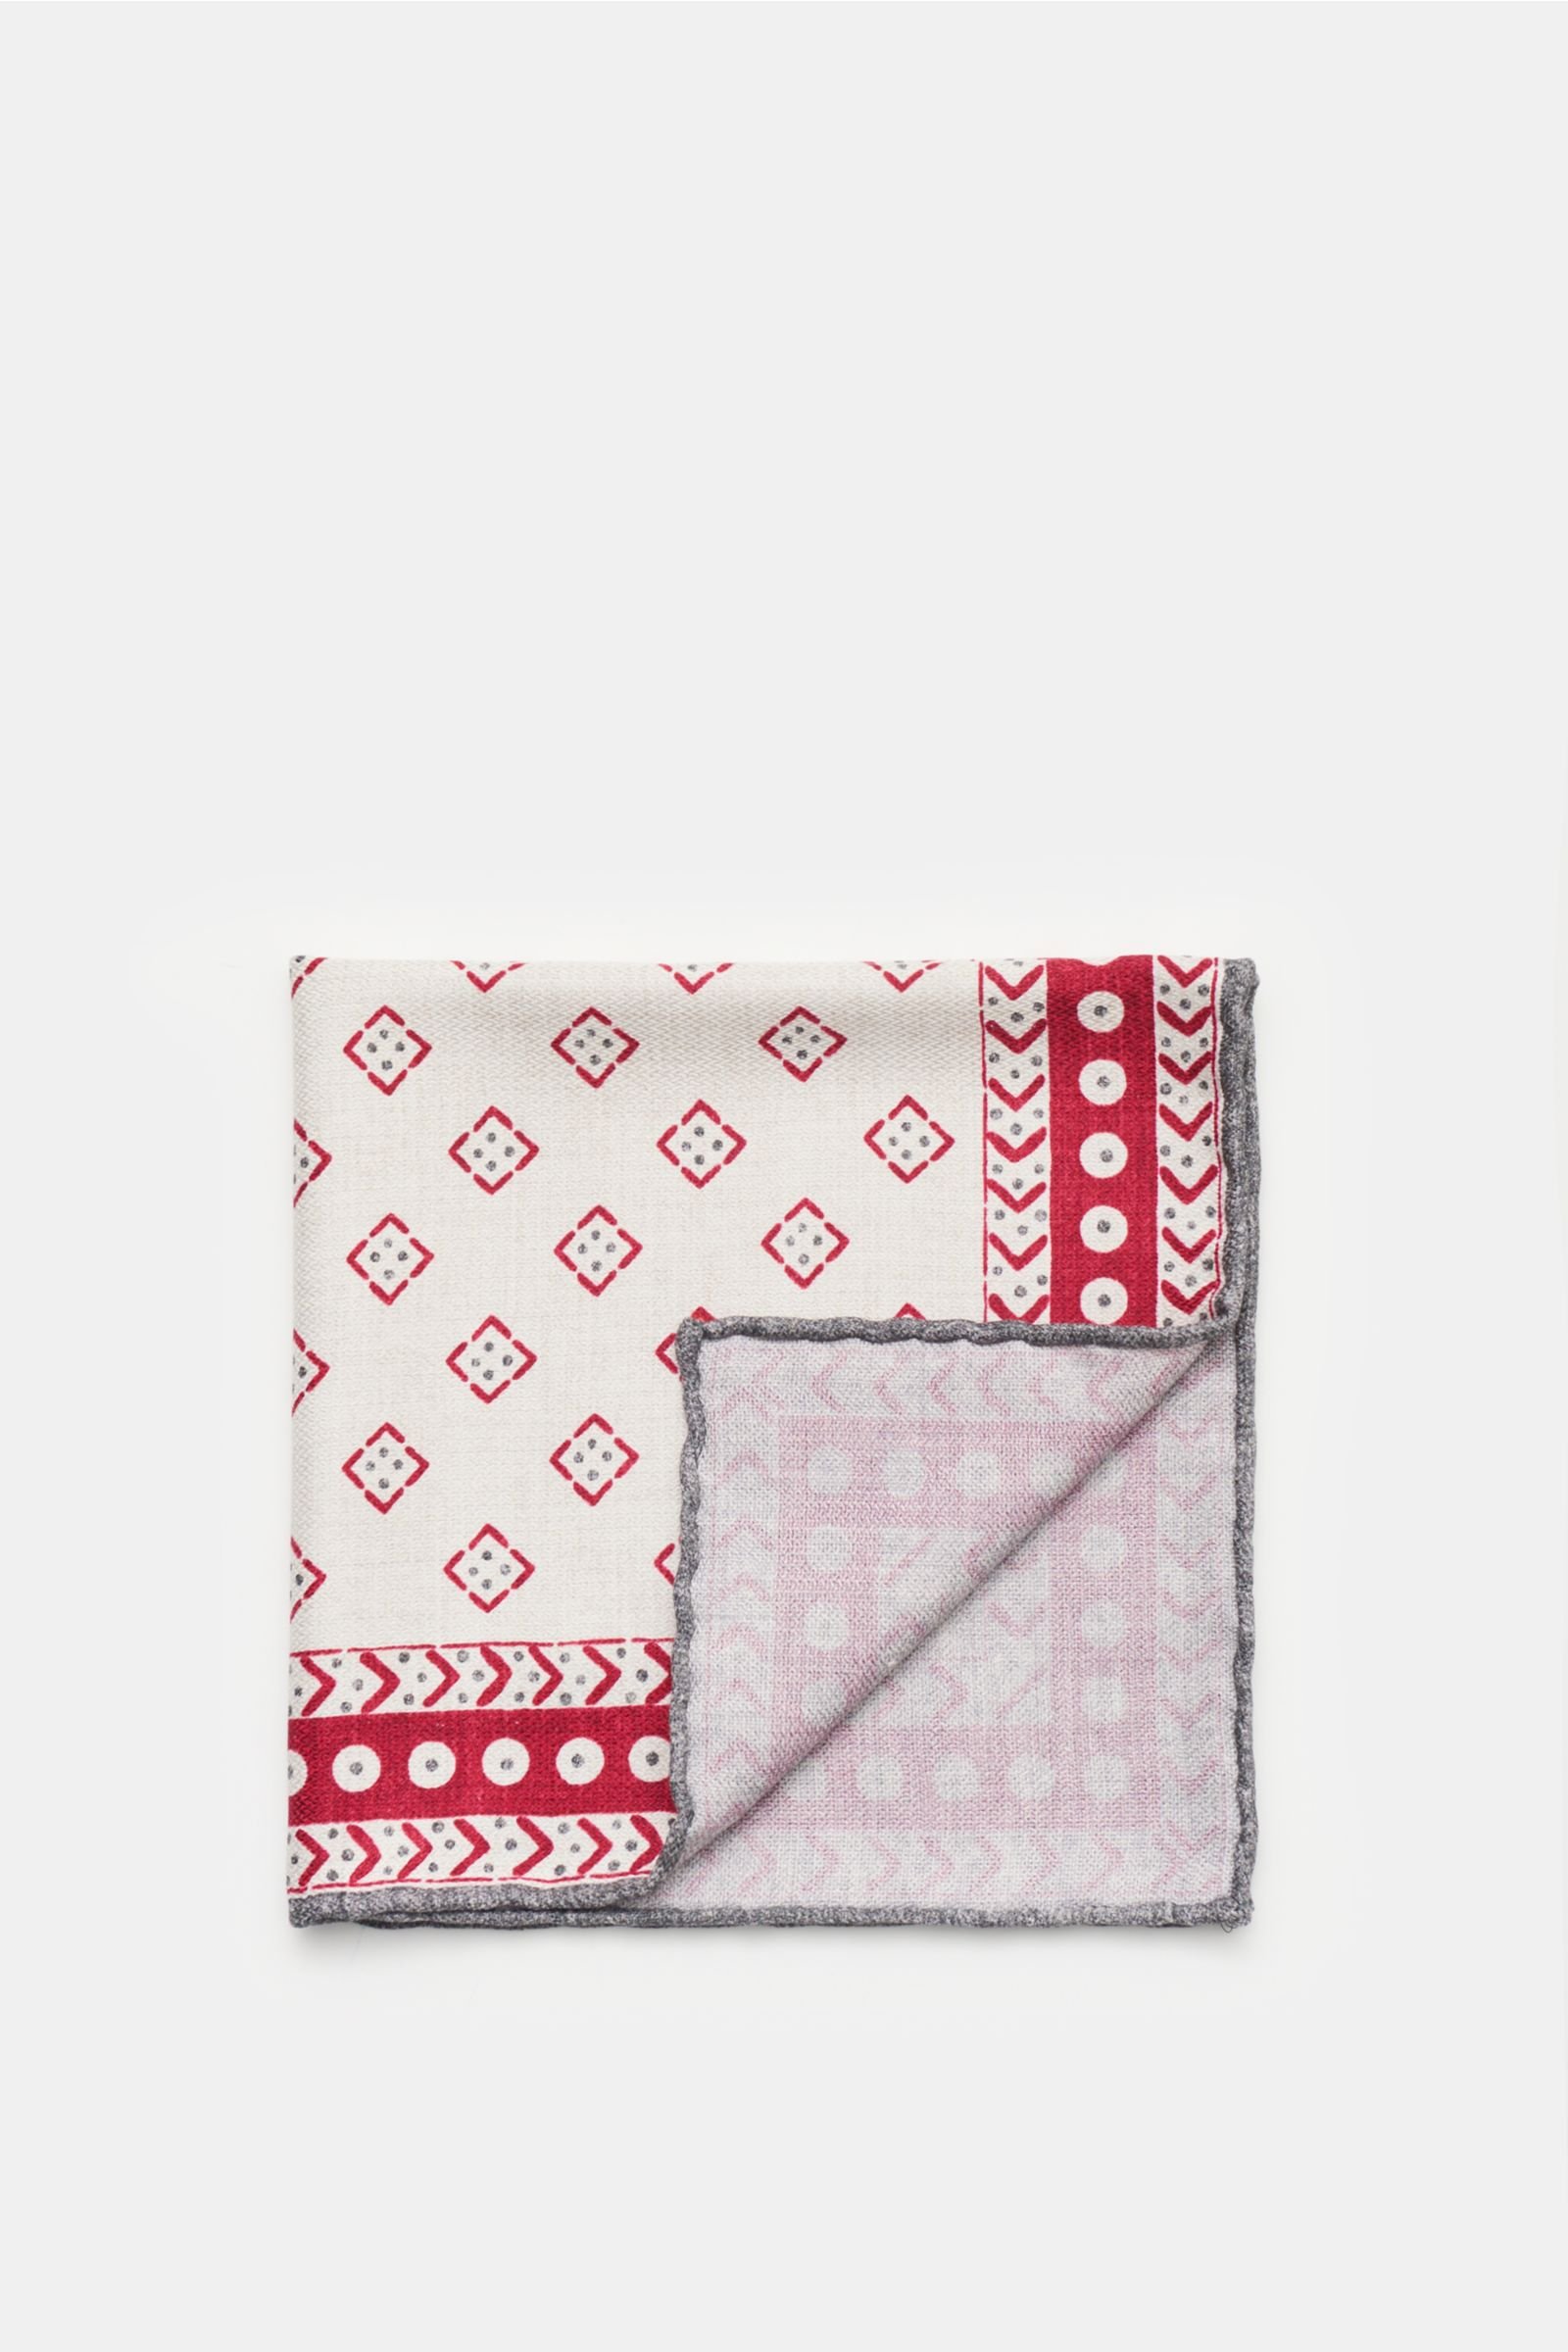 Pocket square cream/burgundy patterned